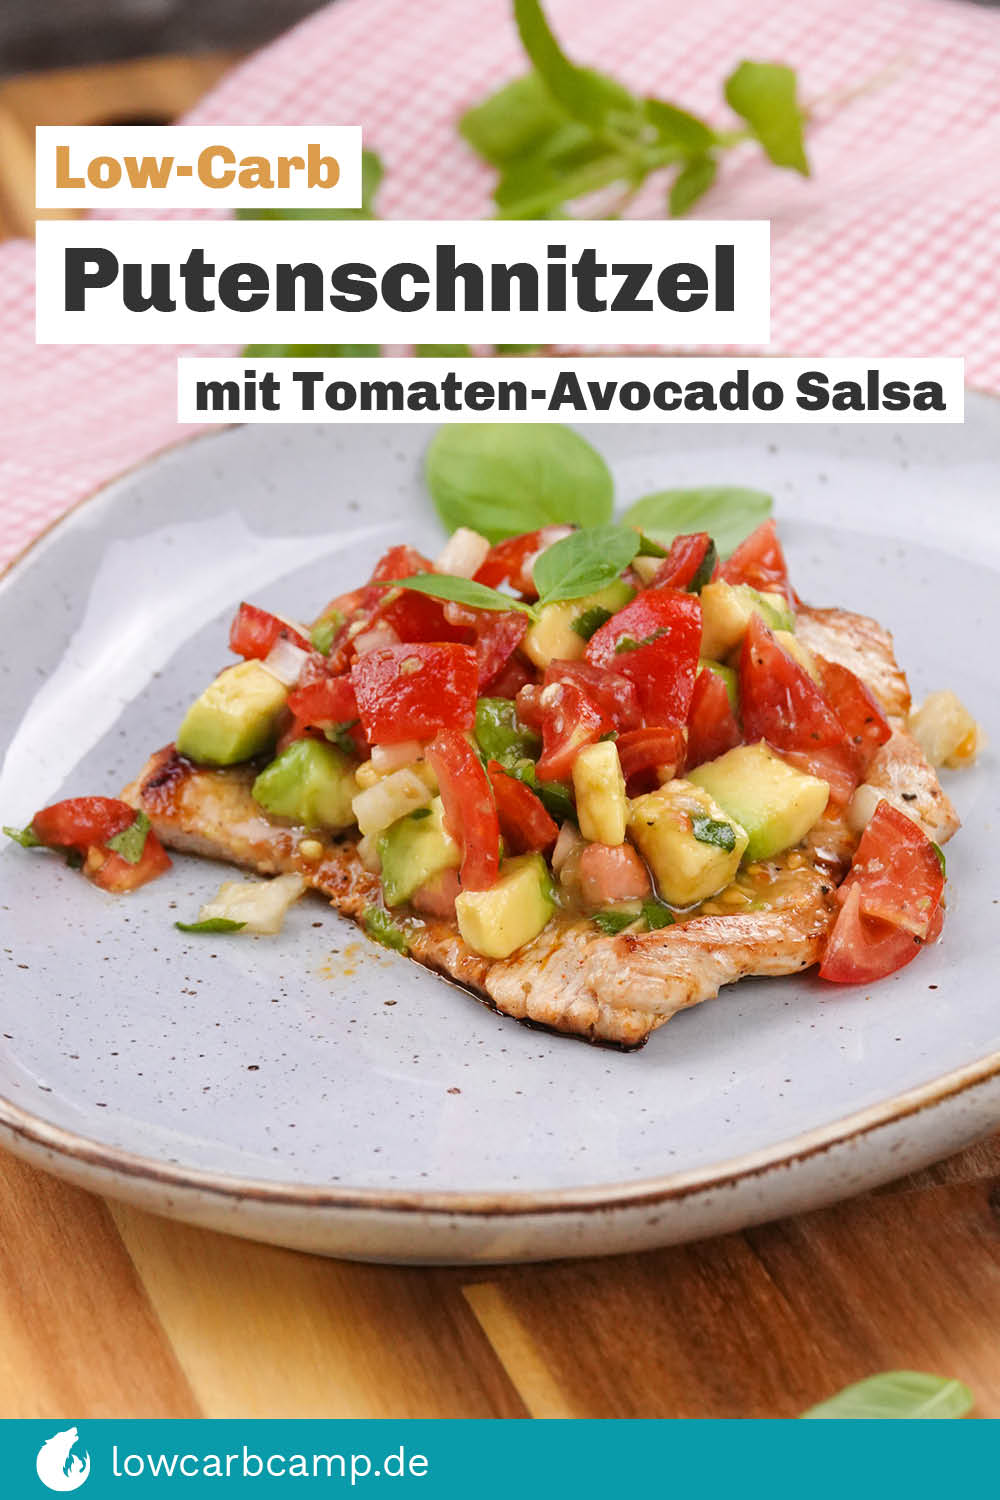 Putenschnitzel mit Tomaten-Avocado Salsa